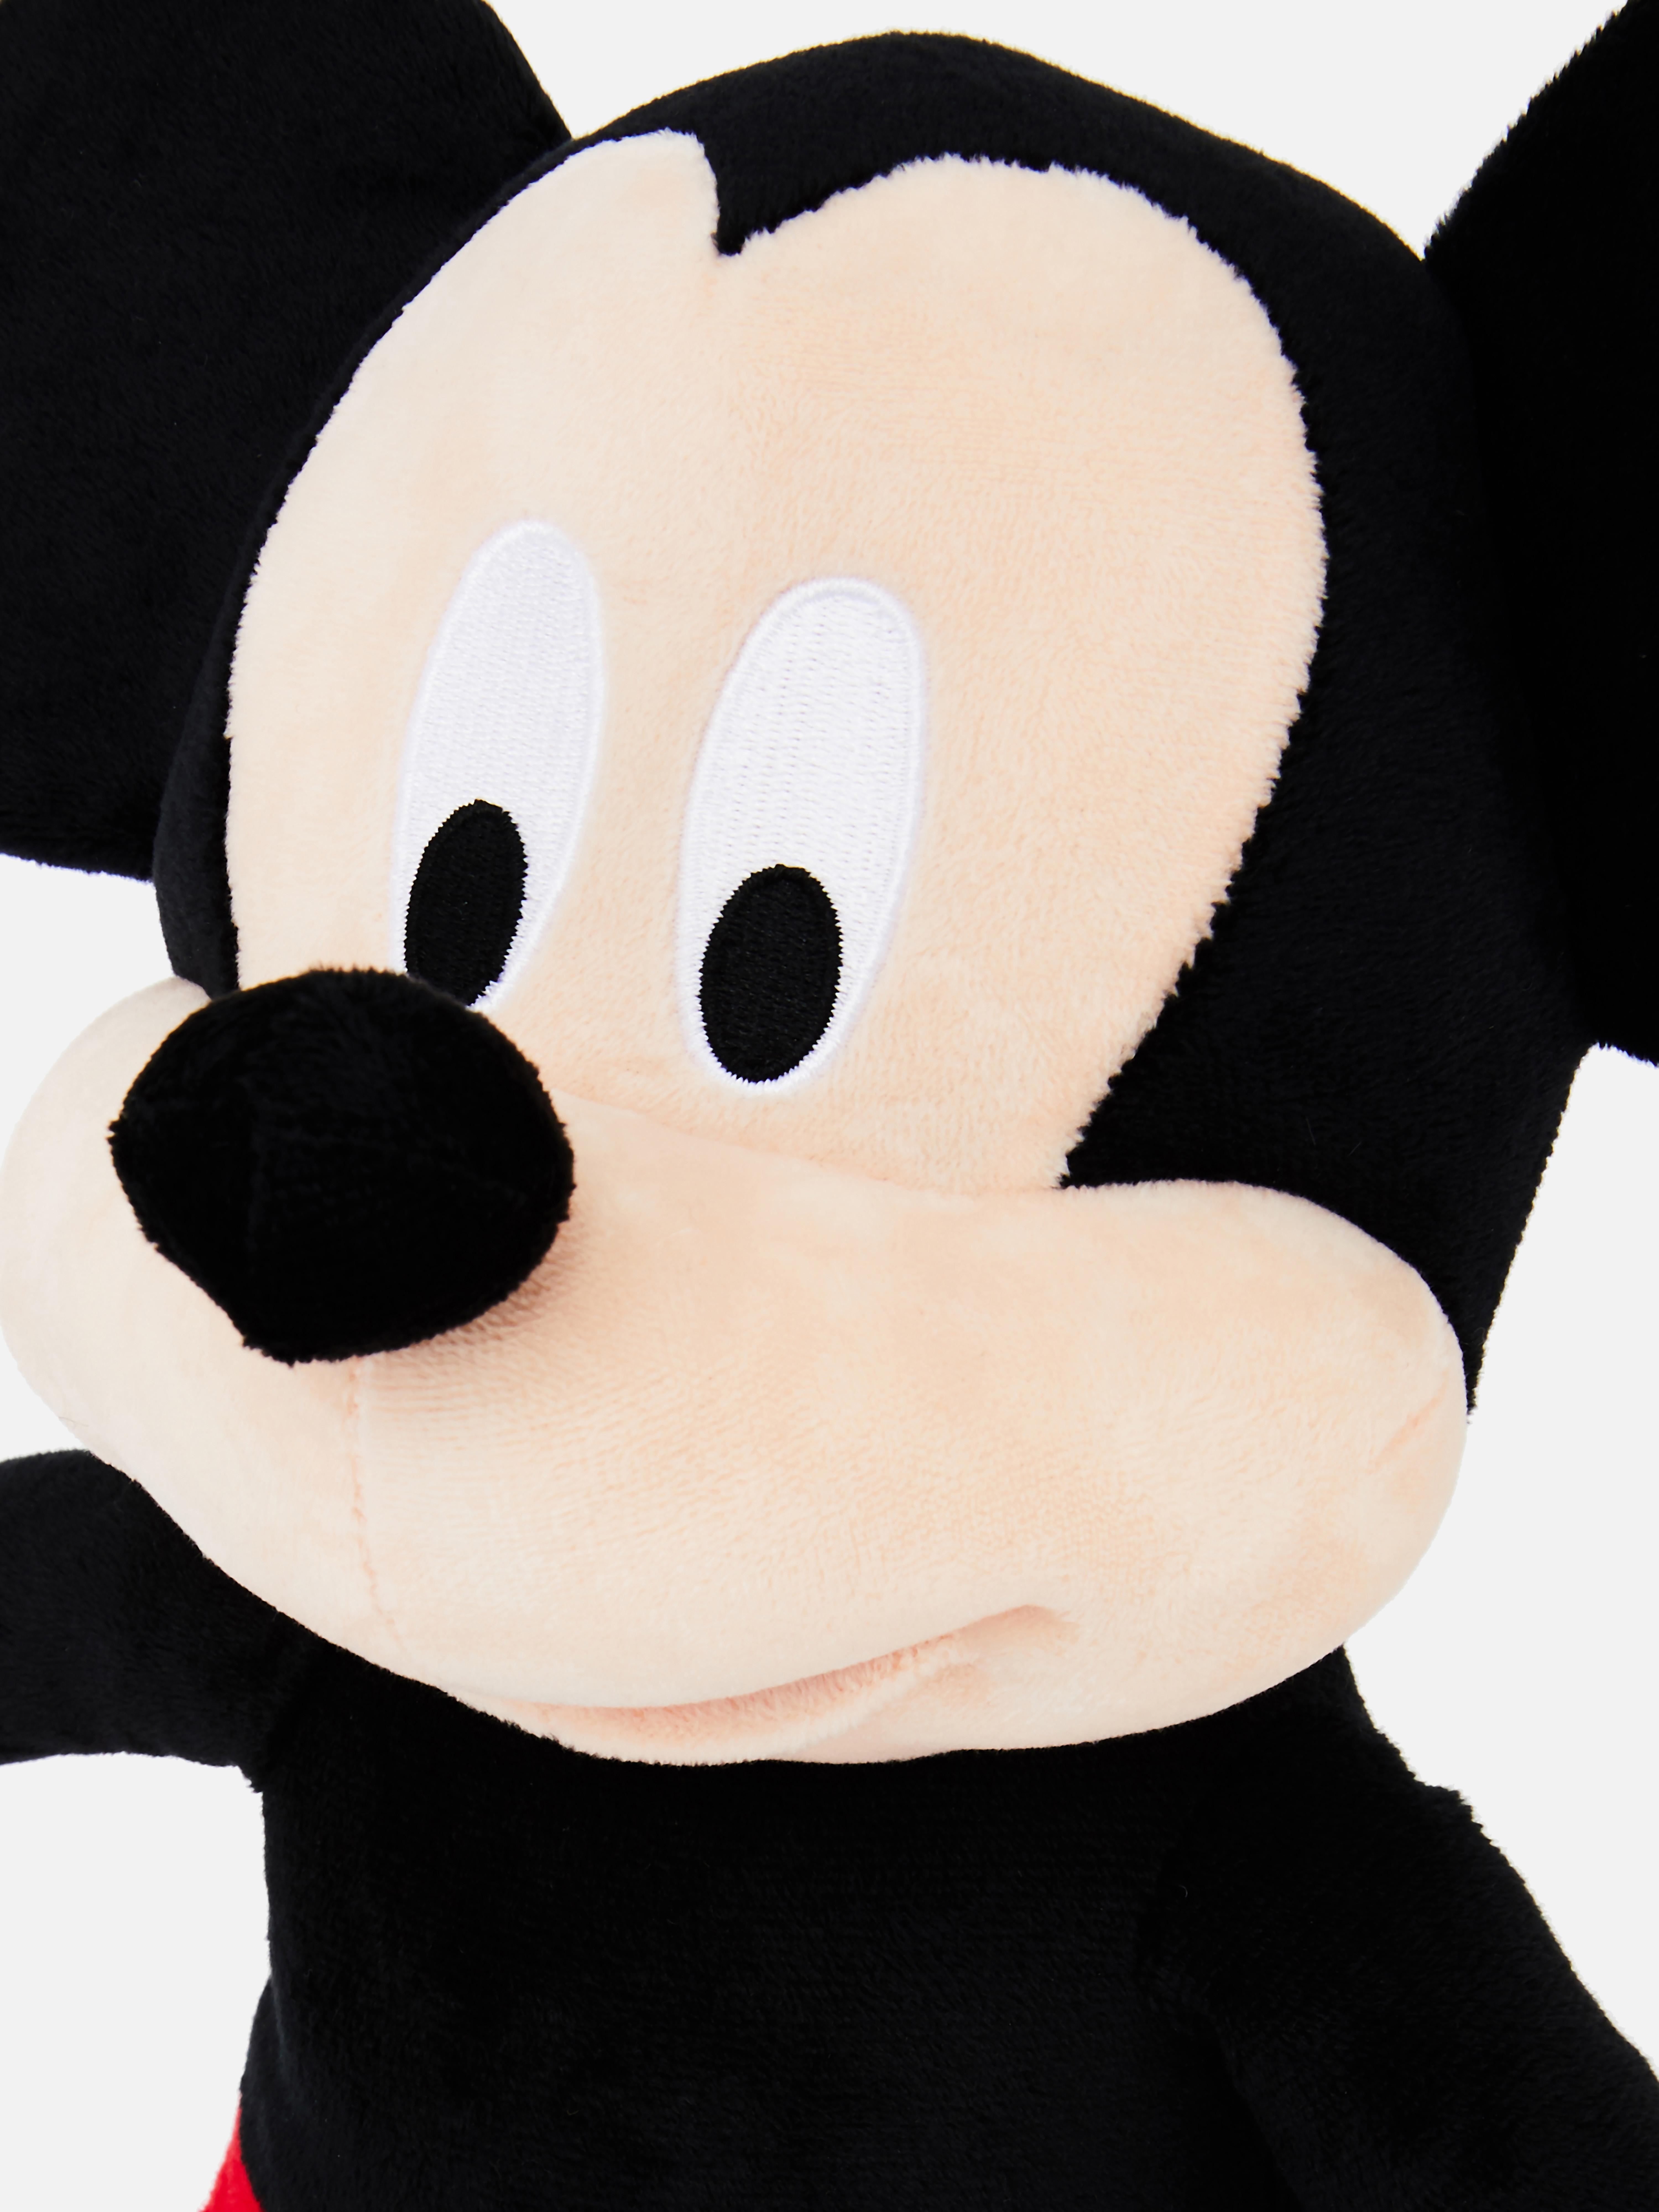 Grande peluche Disney Mickey Mouse